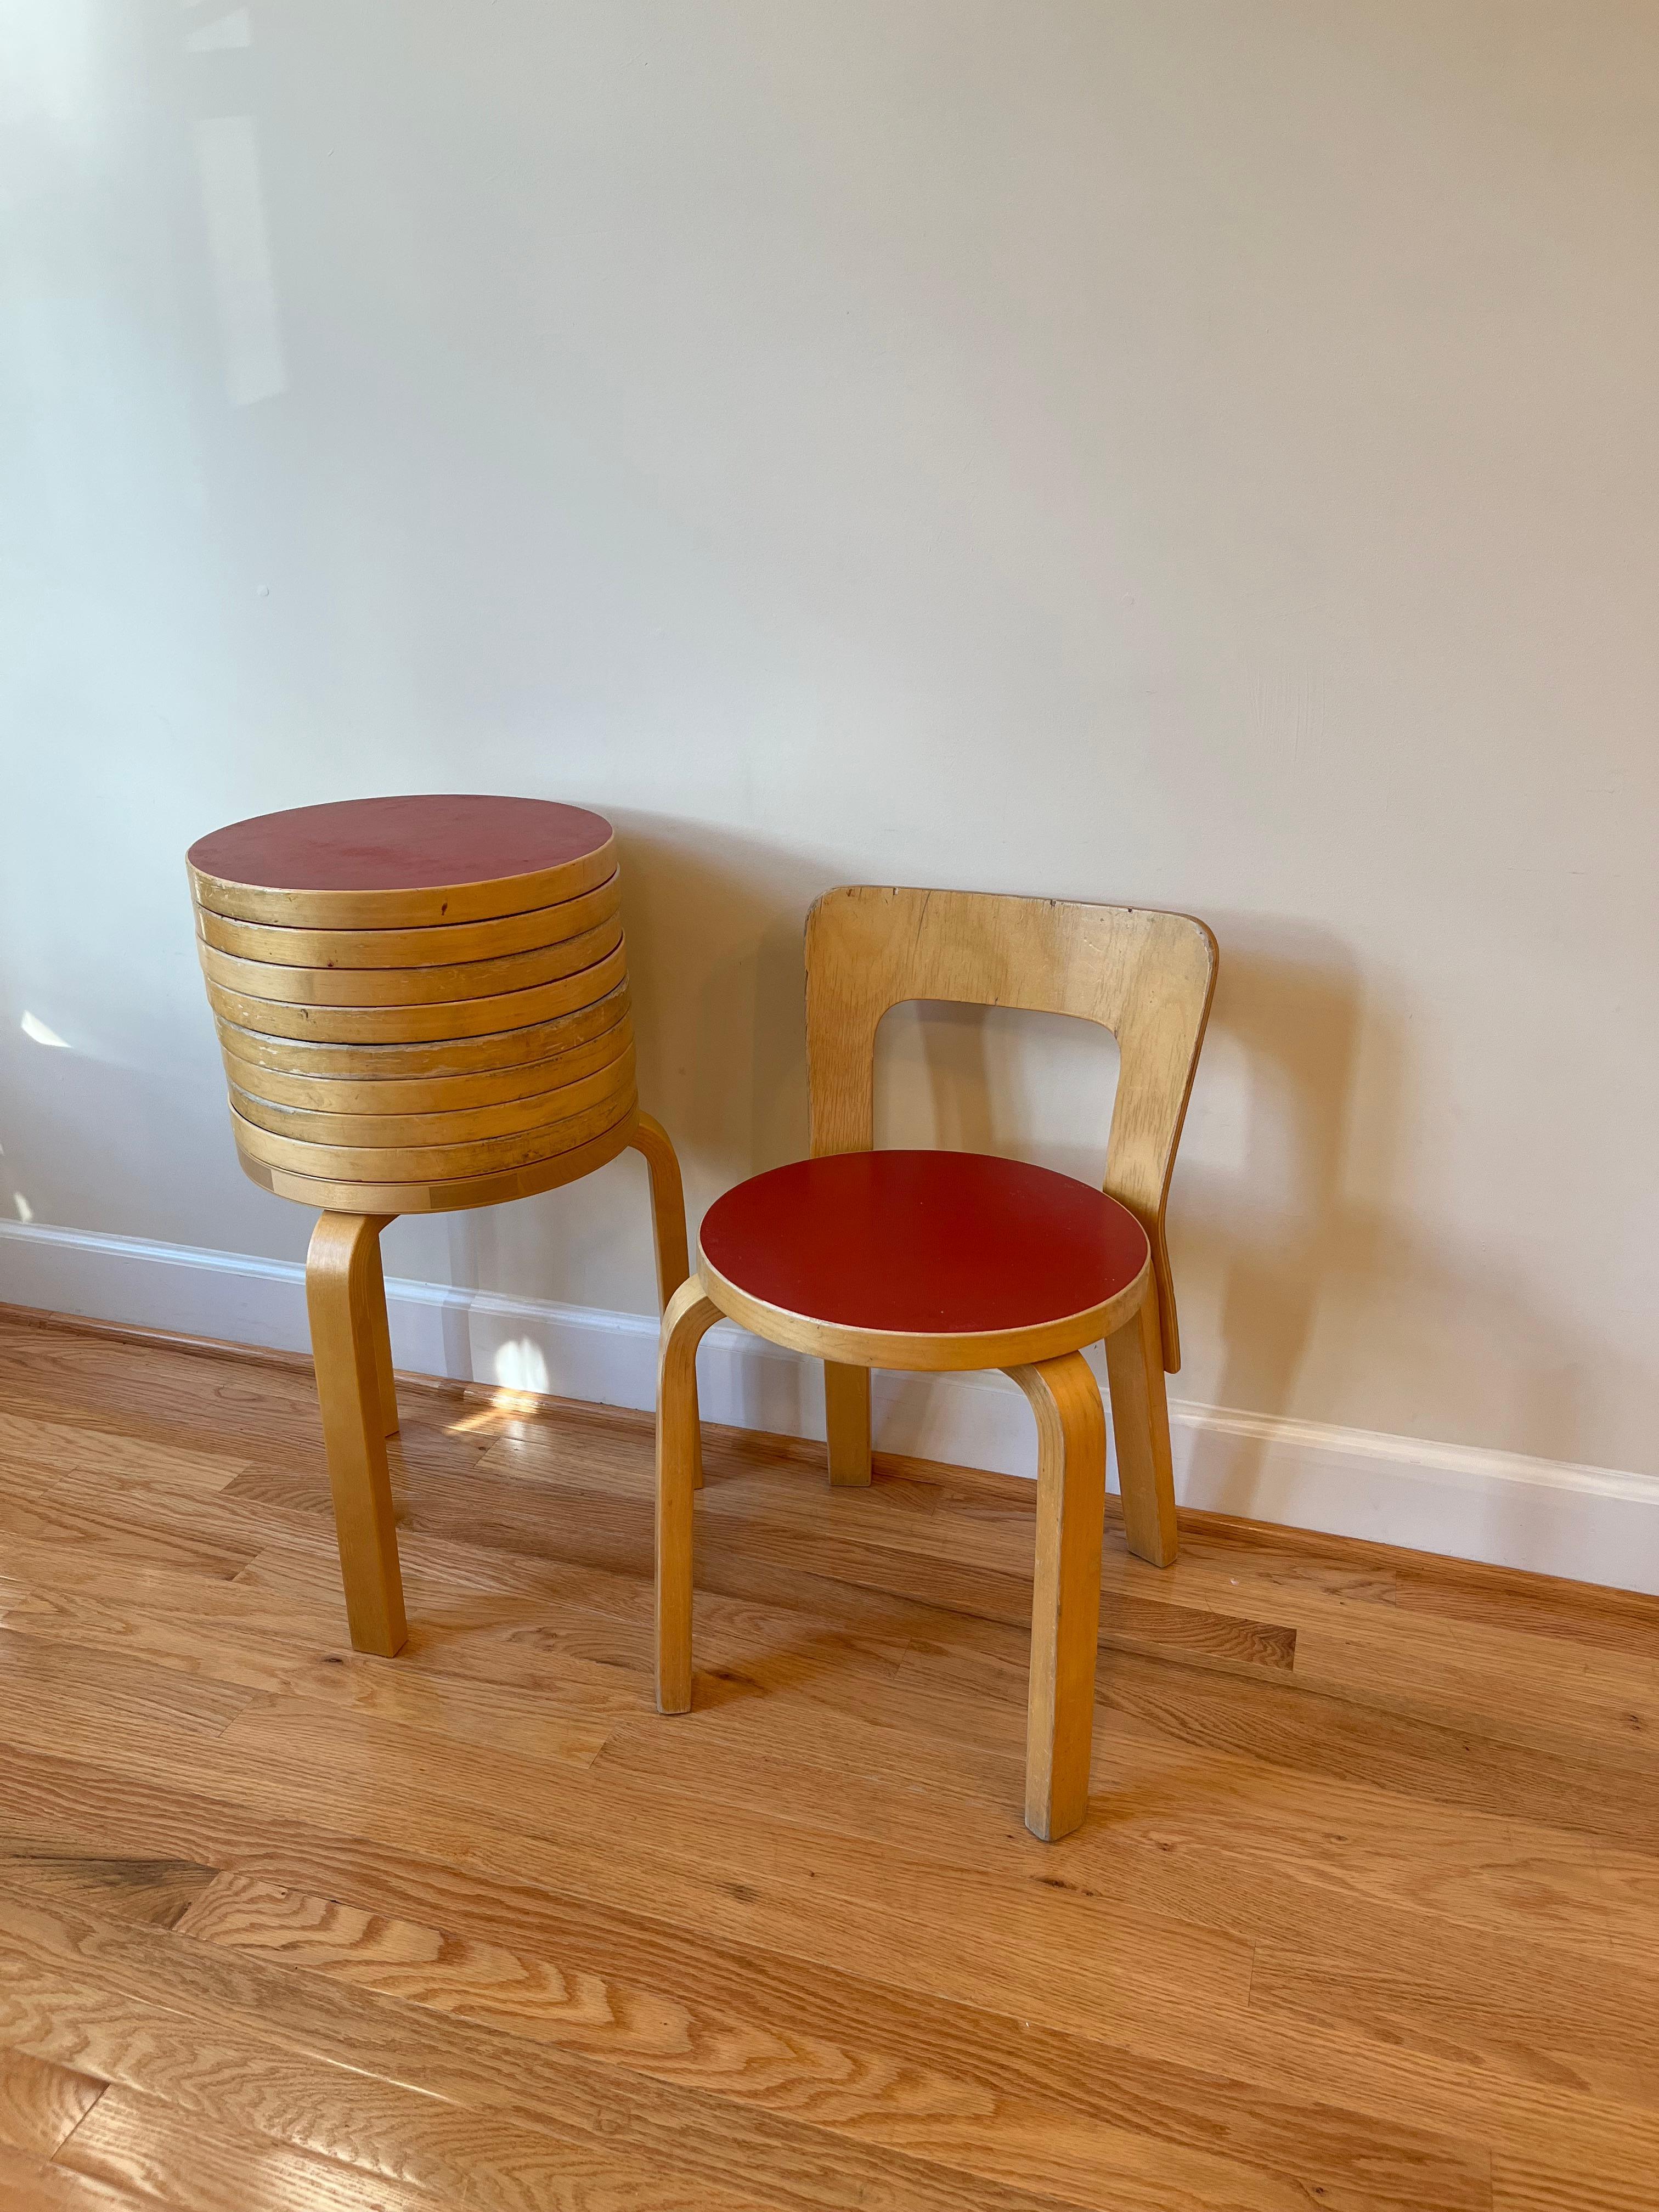 Mid-Century Modern Chair 65 by Alvar Aalto for Artek (Red Linoleum)